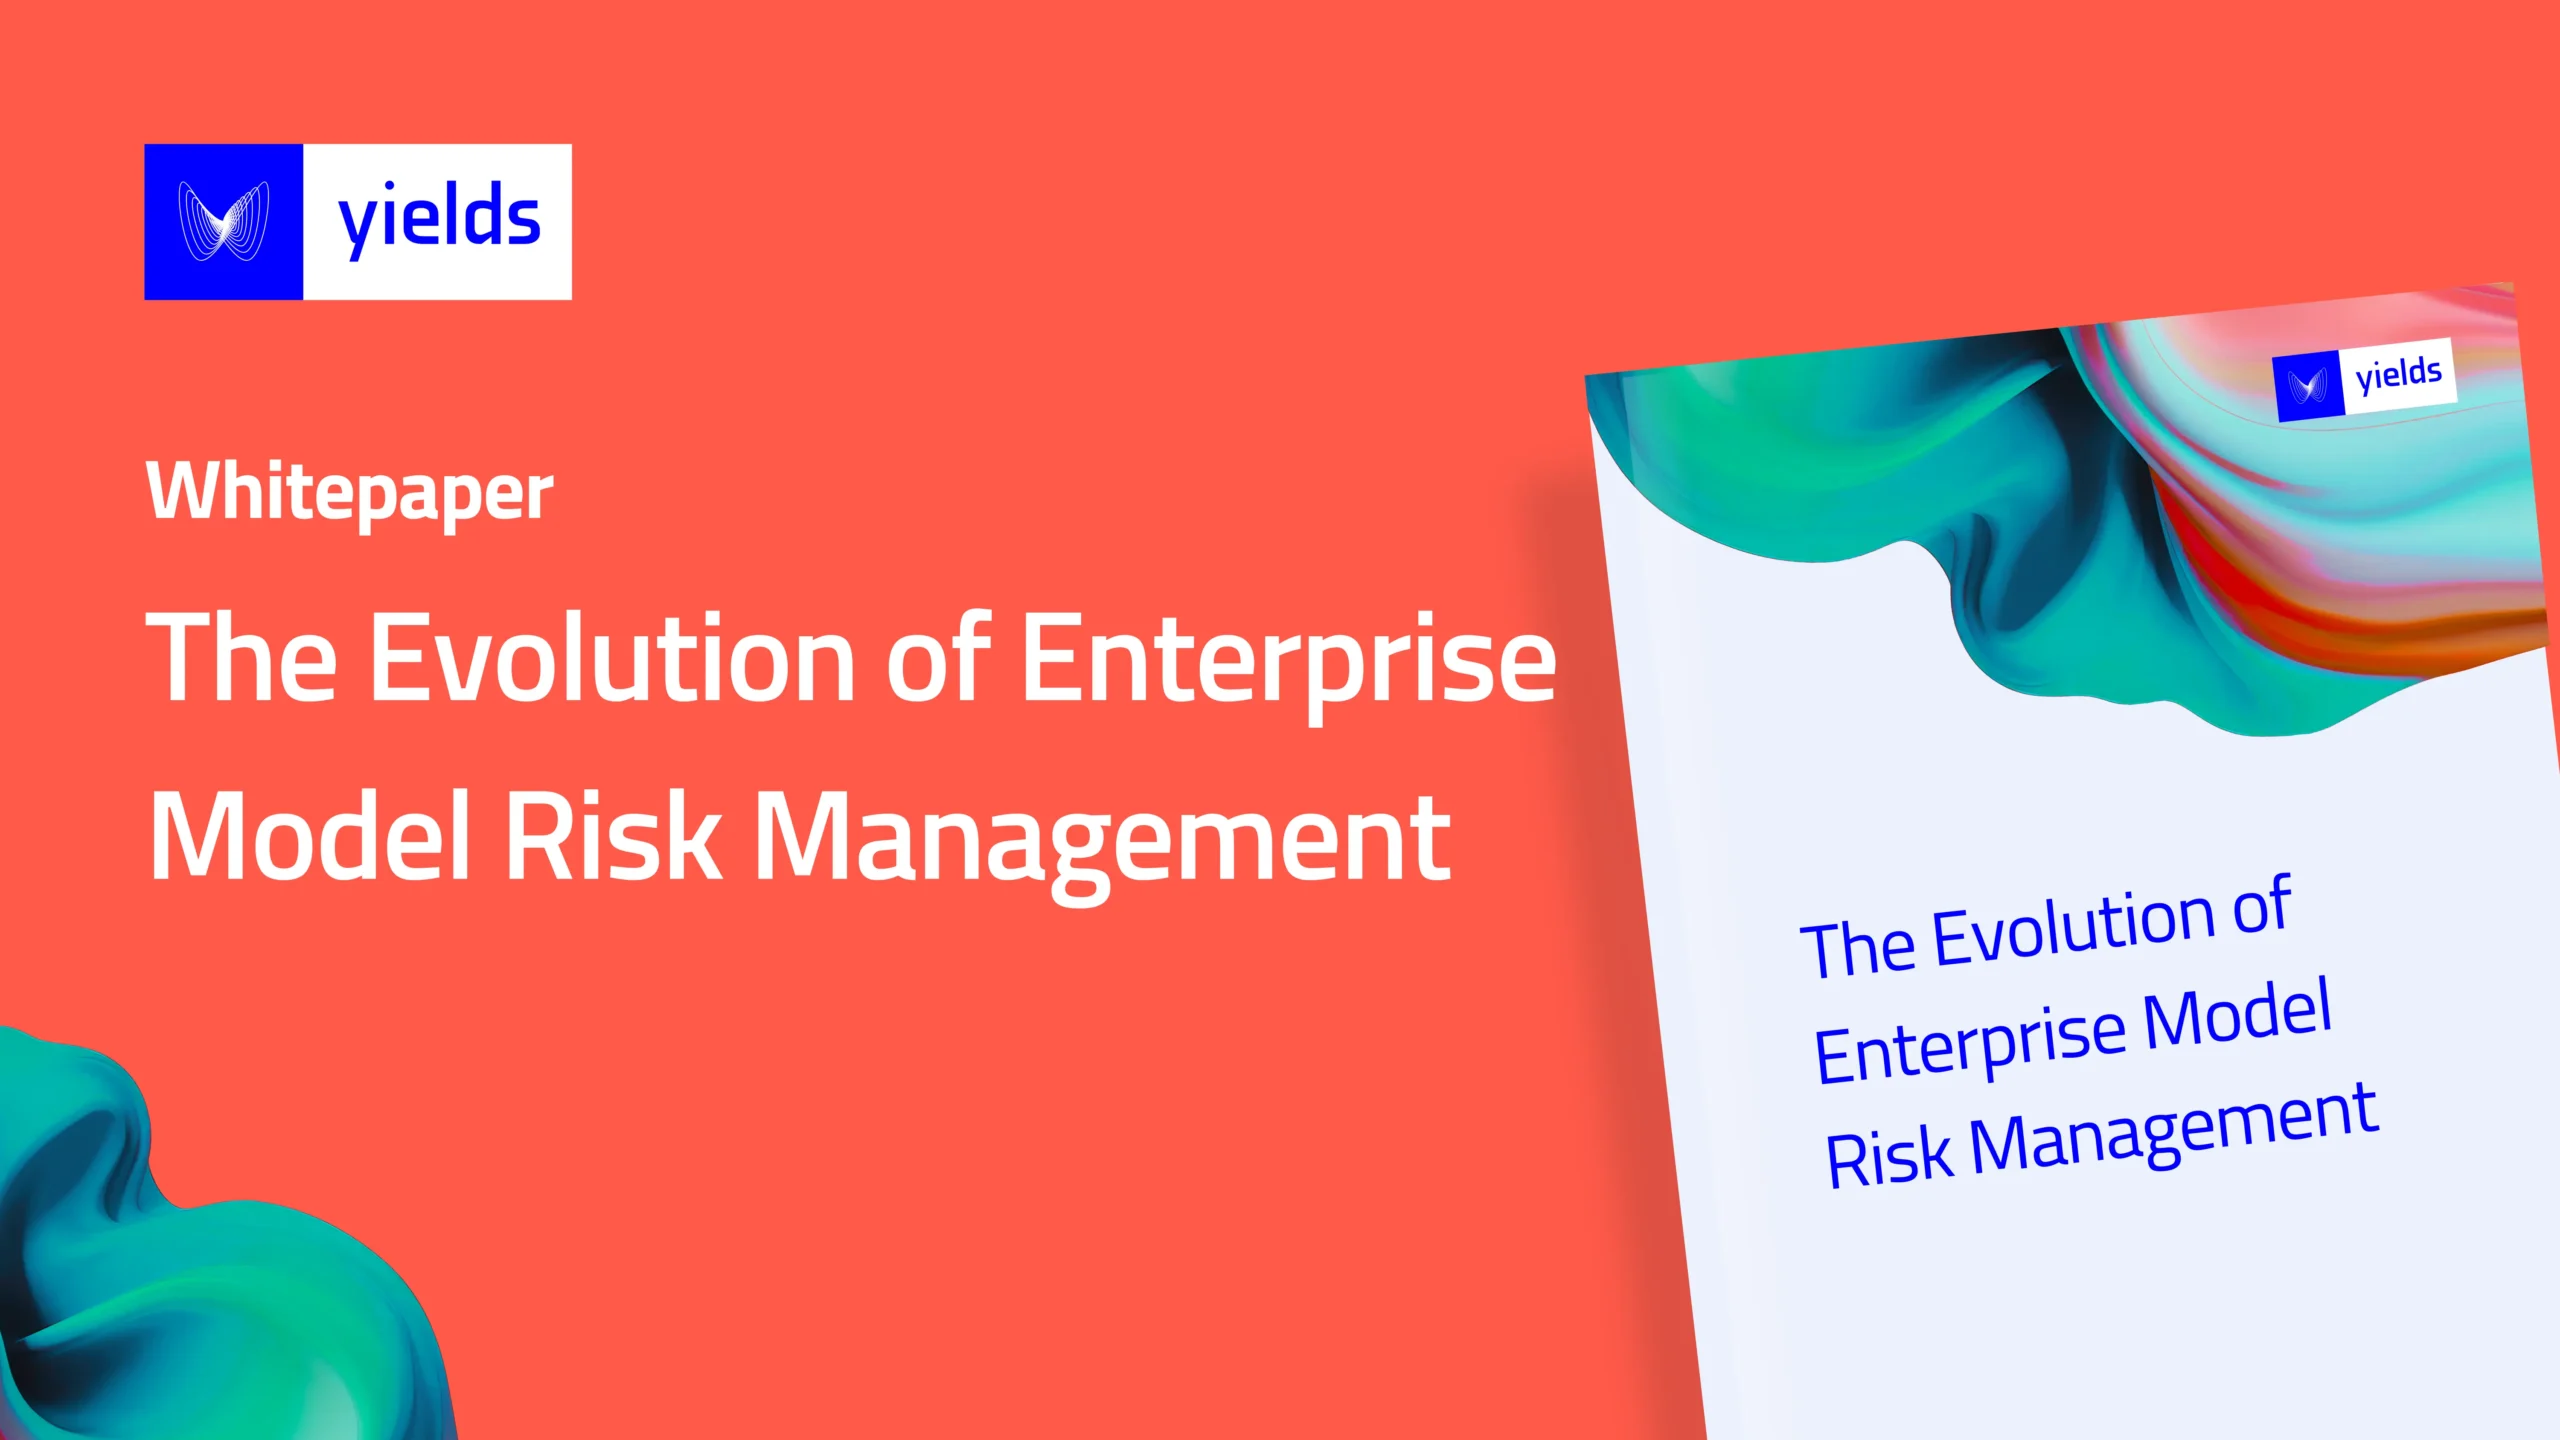 The Evolution of Enterprise Model Risk Management